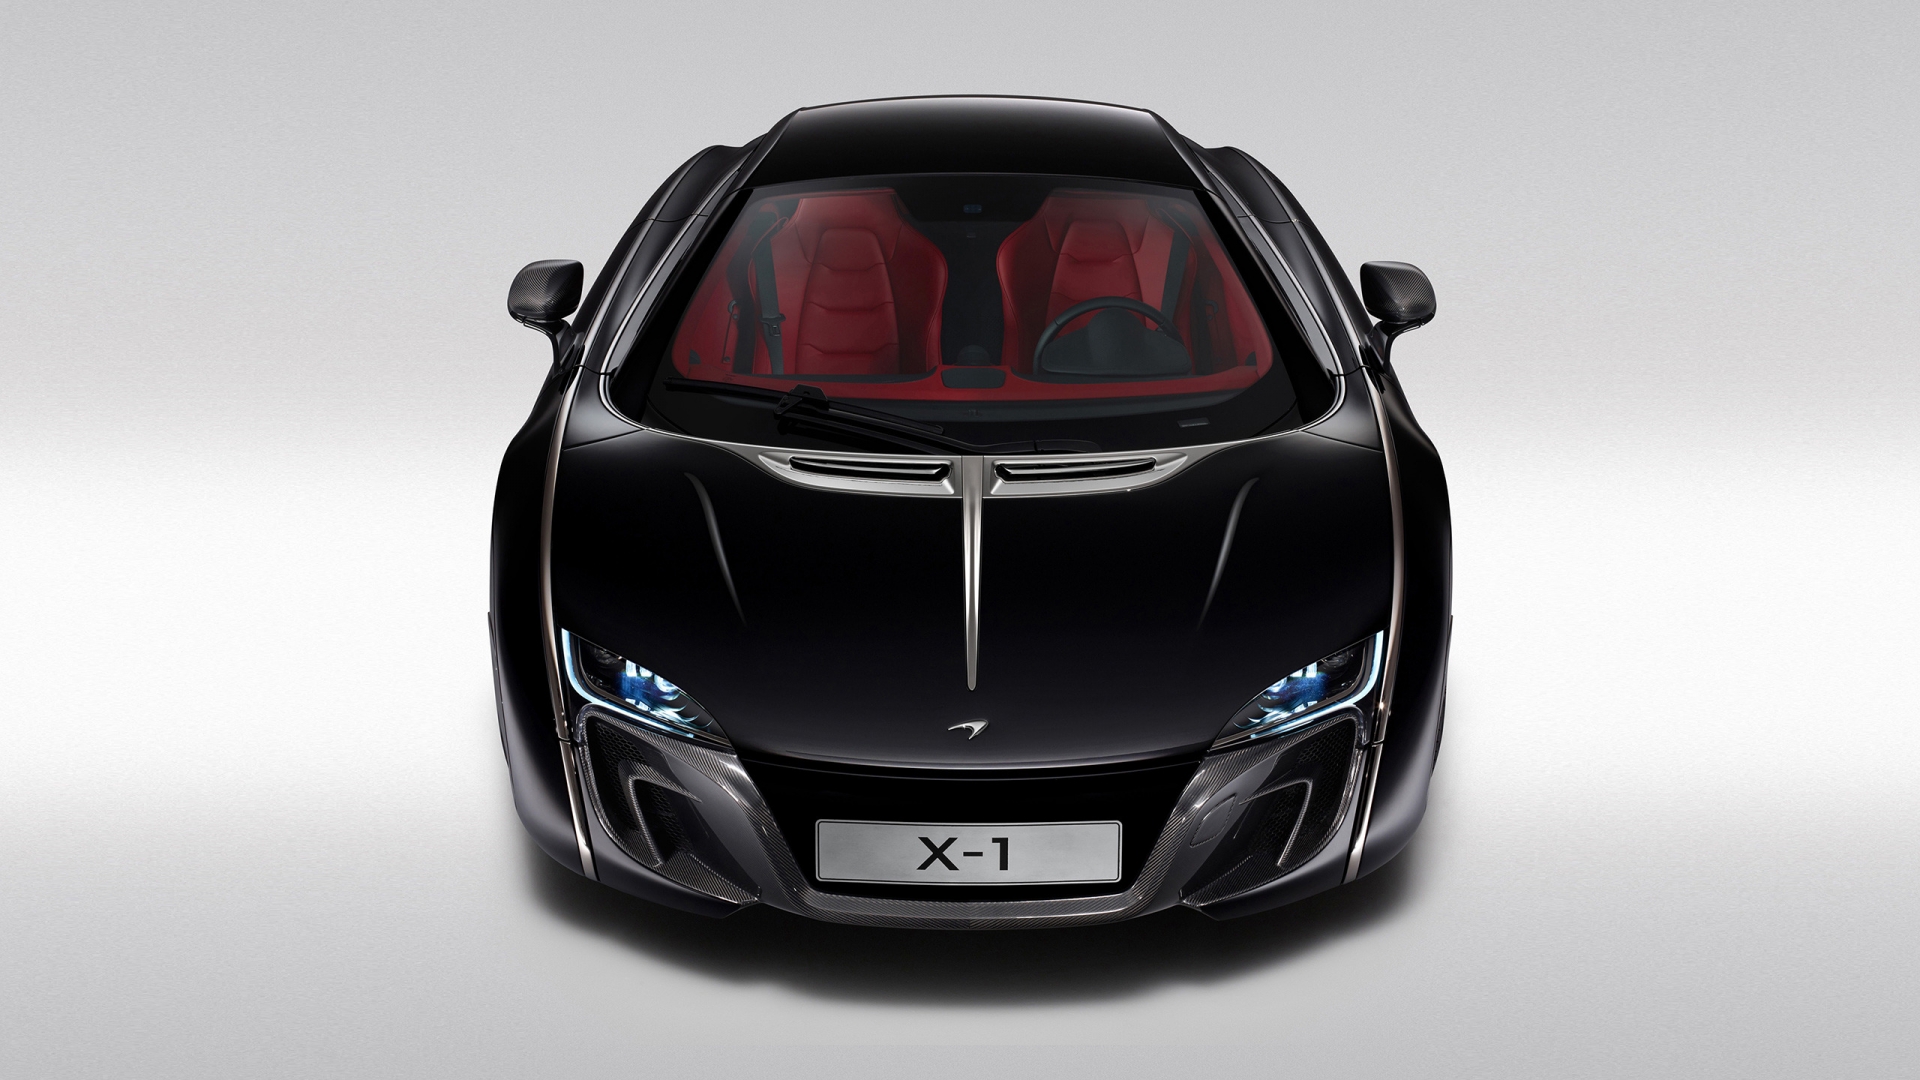 McLaren X1 Concept Front for 1920 x 1080 HDTV 1080p resolution